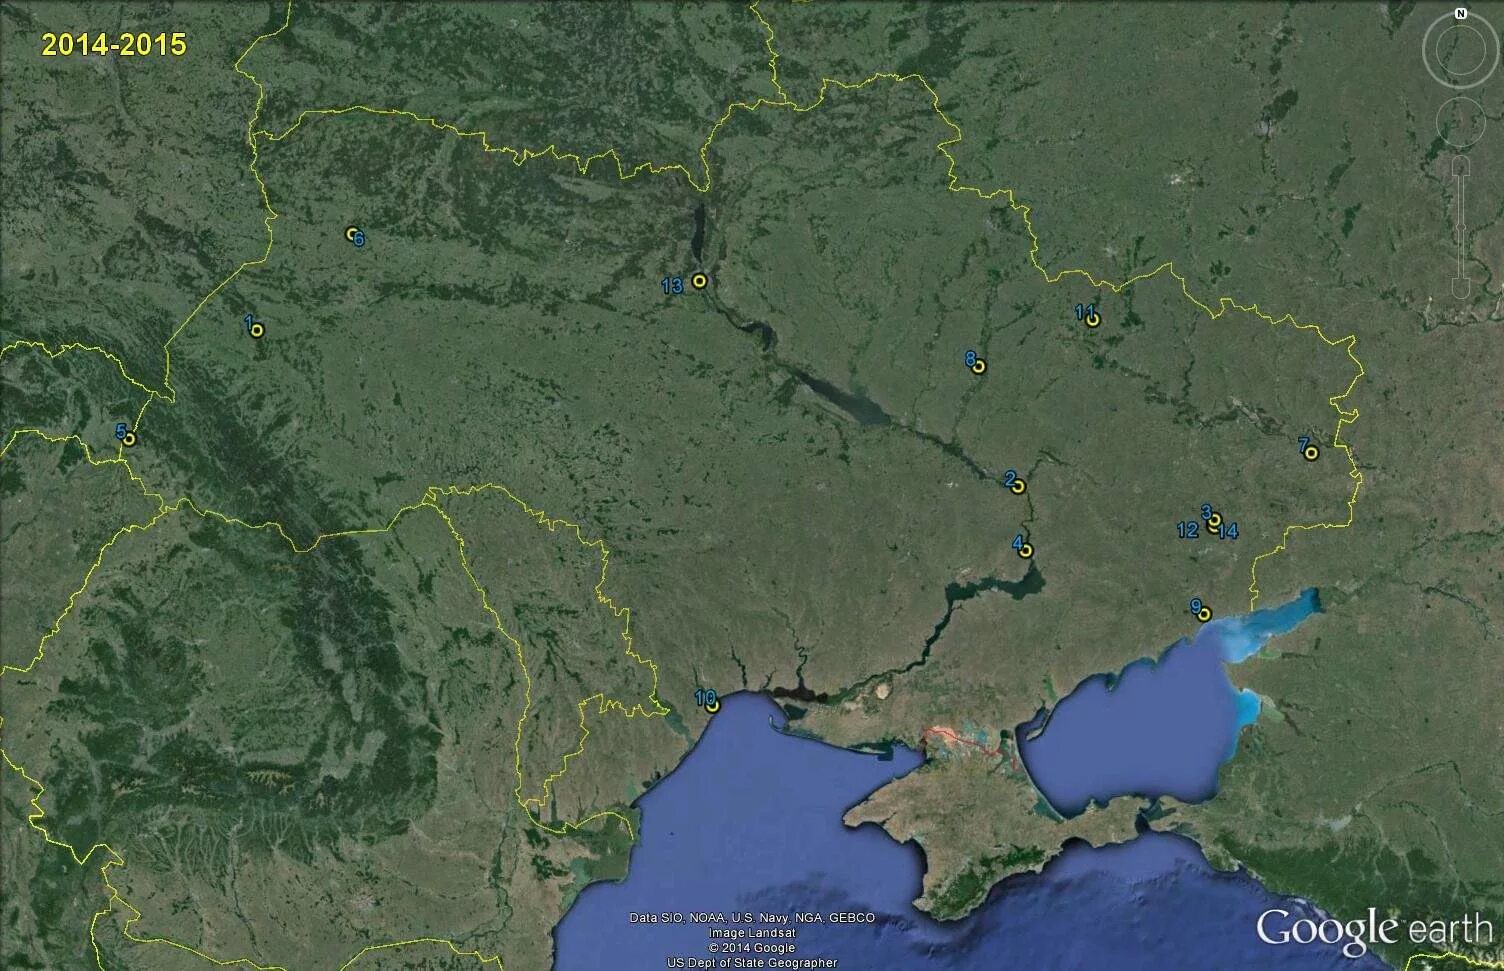 Украина возле границ. Граница Украины и Румынии на карте. Граница Венгрии и Украины. Граница Украины и Румынии по Дунаю. Границы Украины.